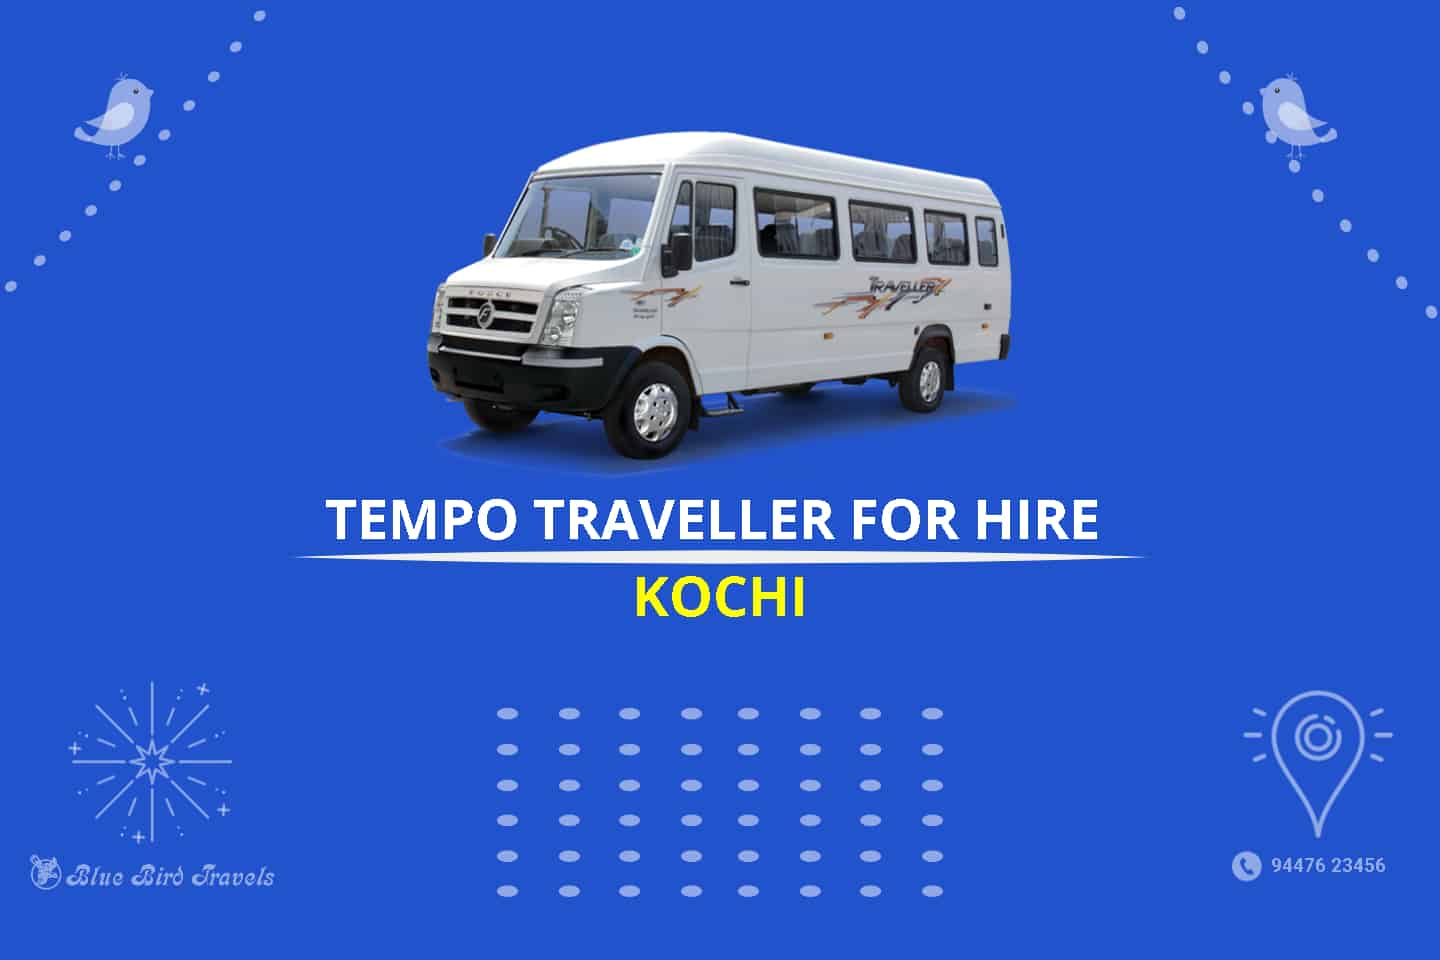 Tempo Traveller - Local Use